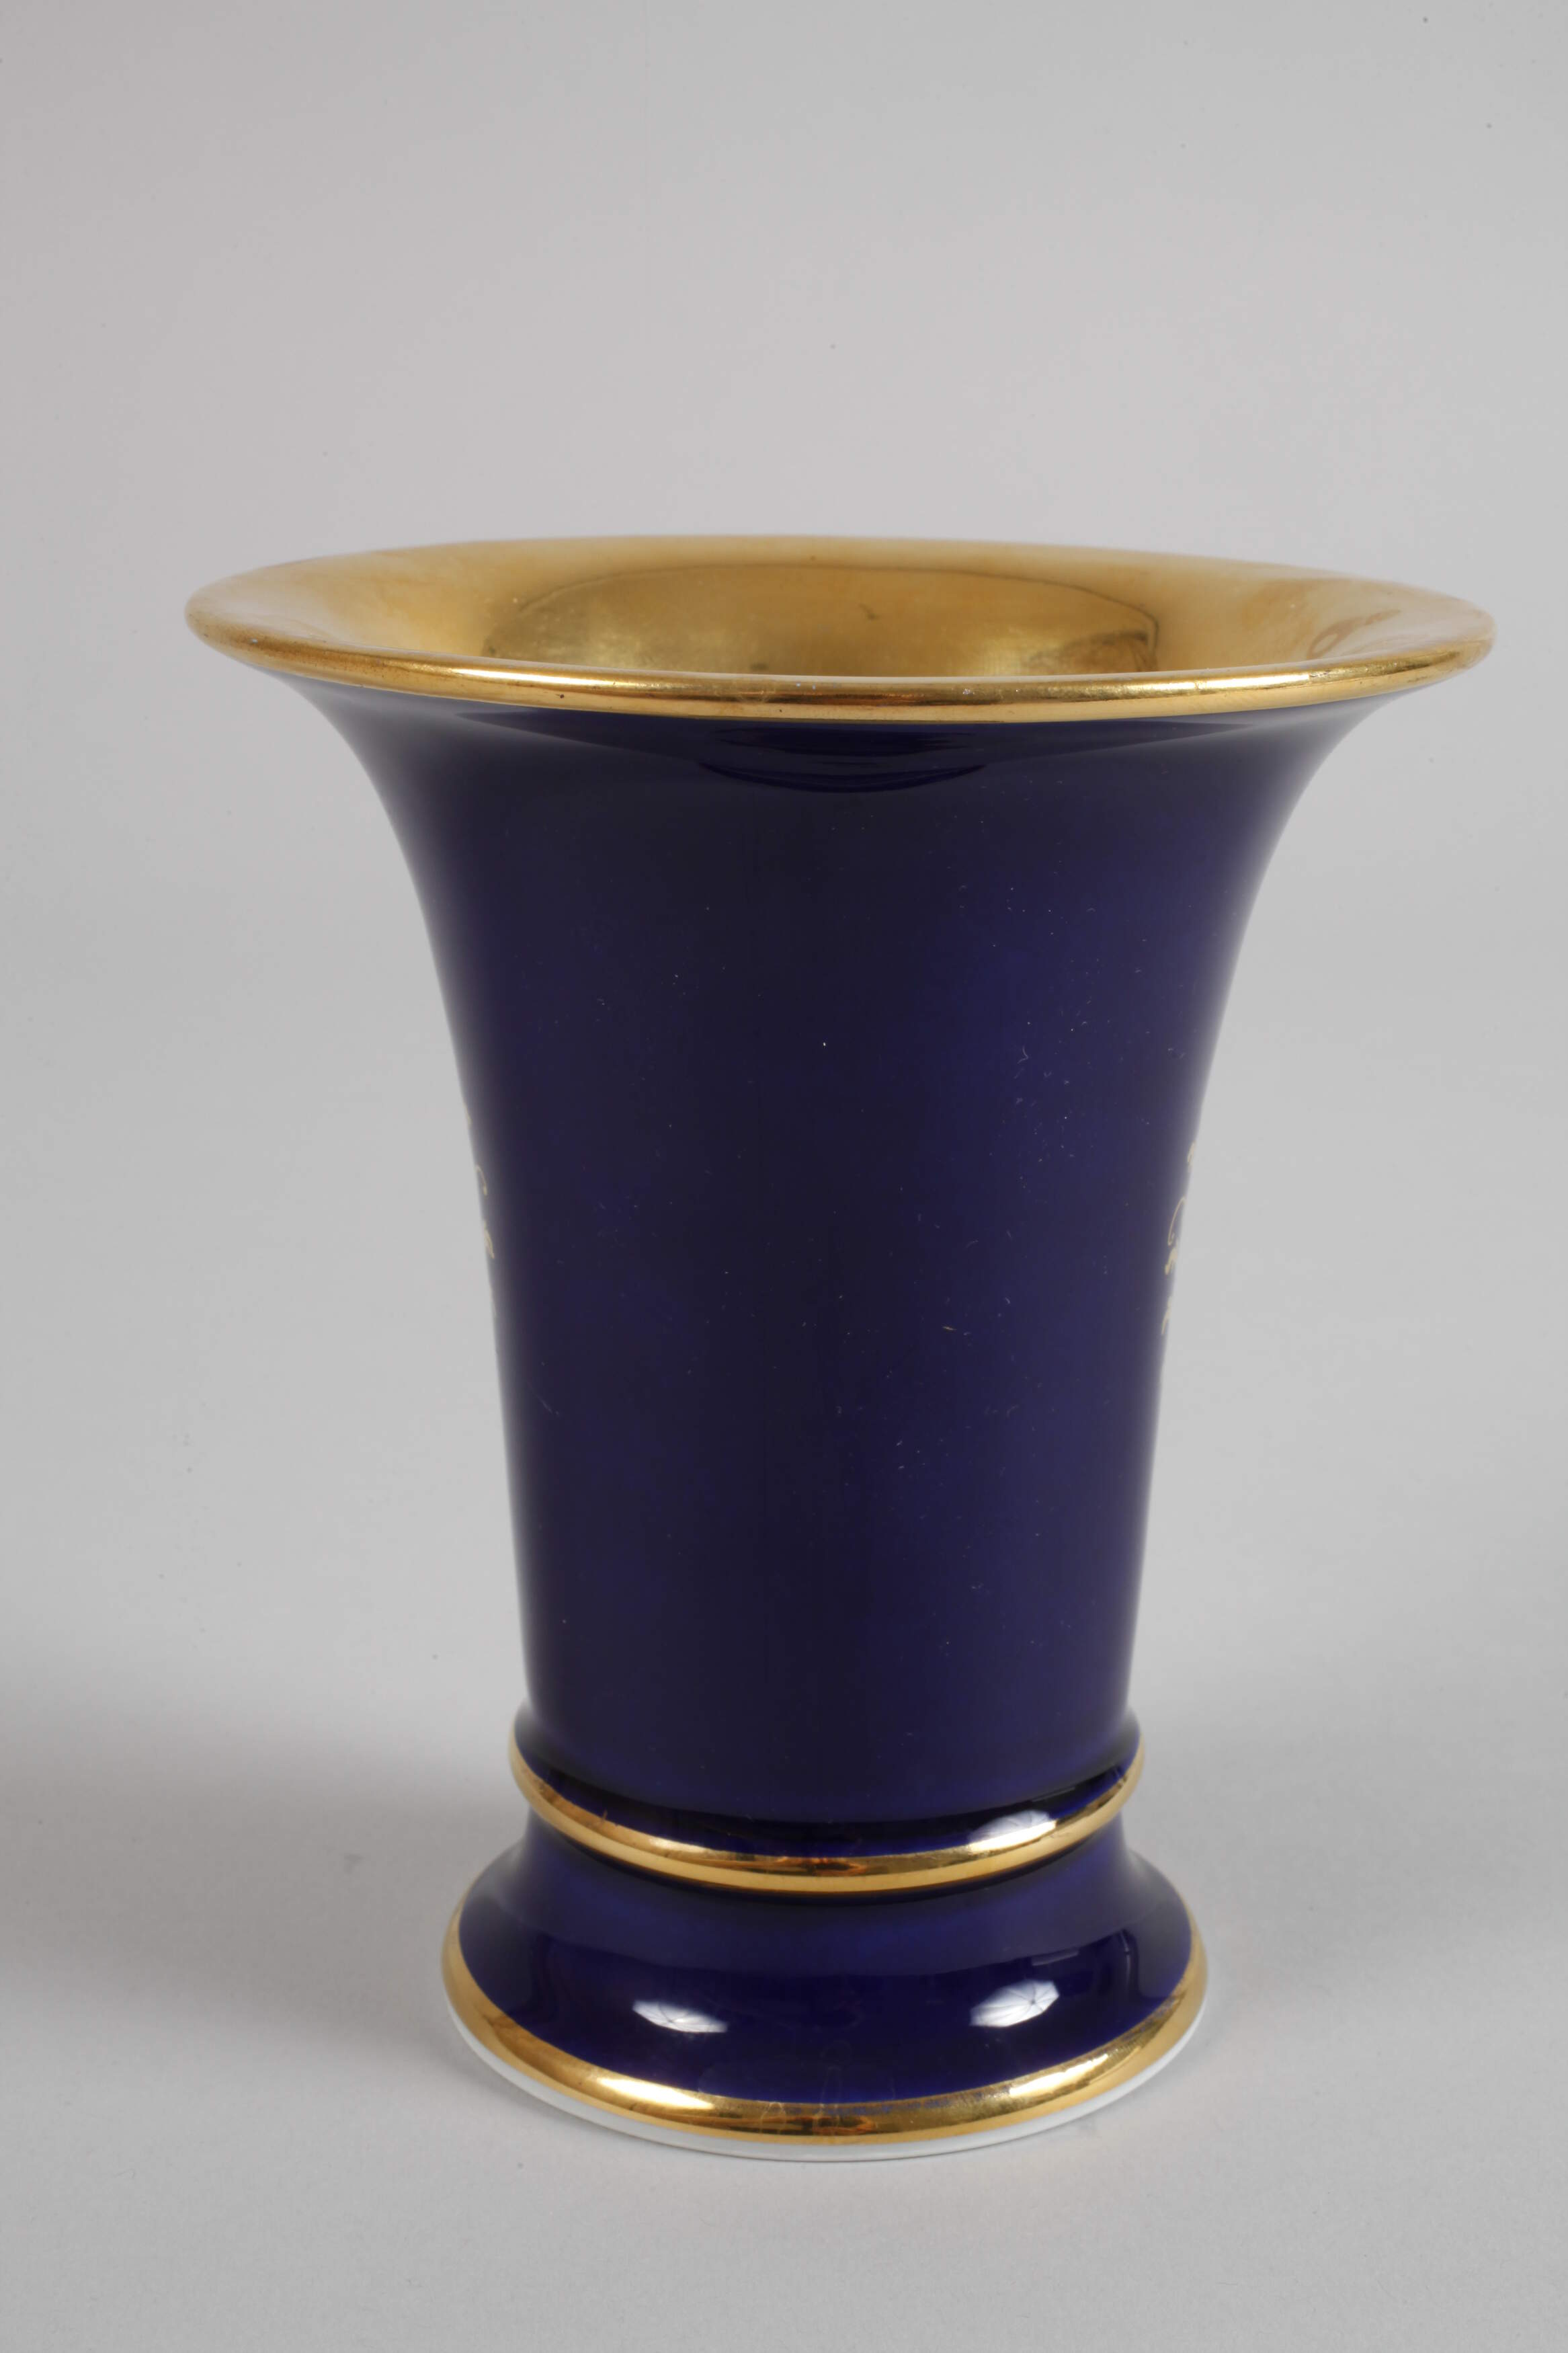 Meissen trumpet vase "Amsterdam Art" - Image 2 of 3